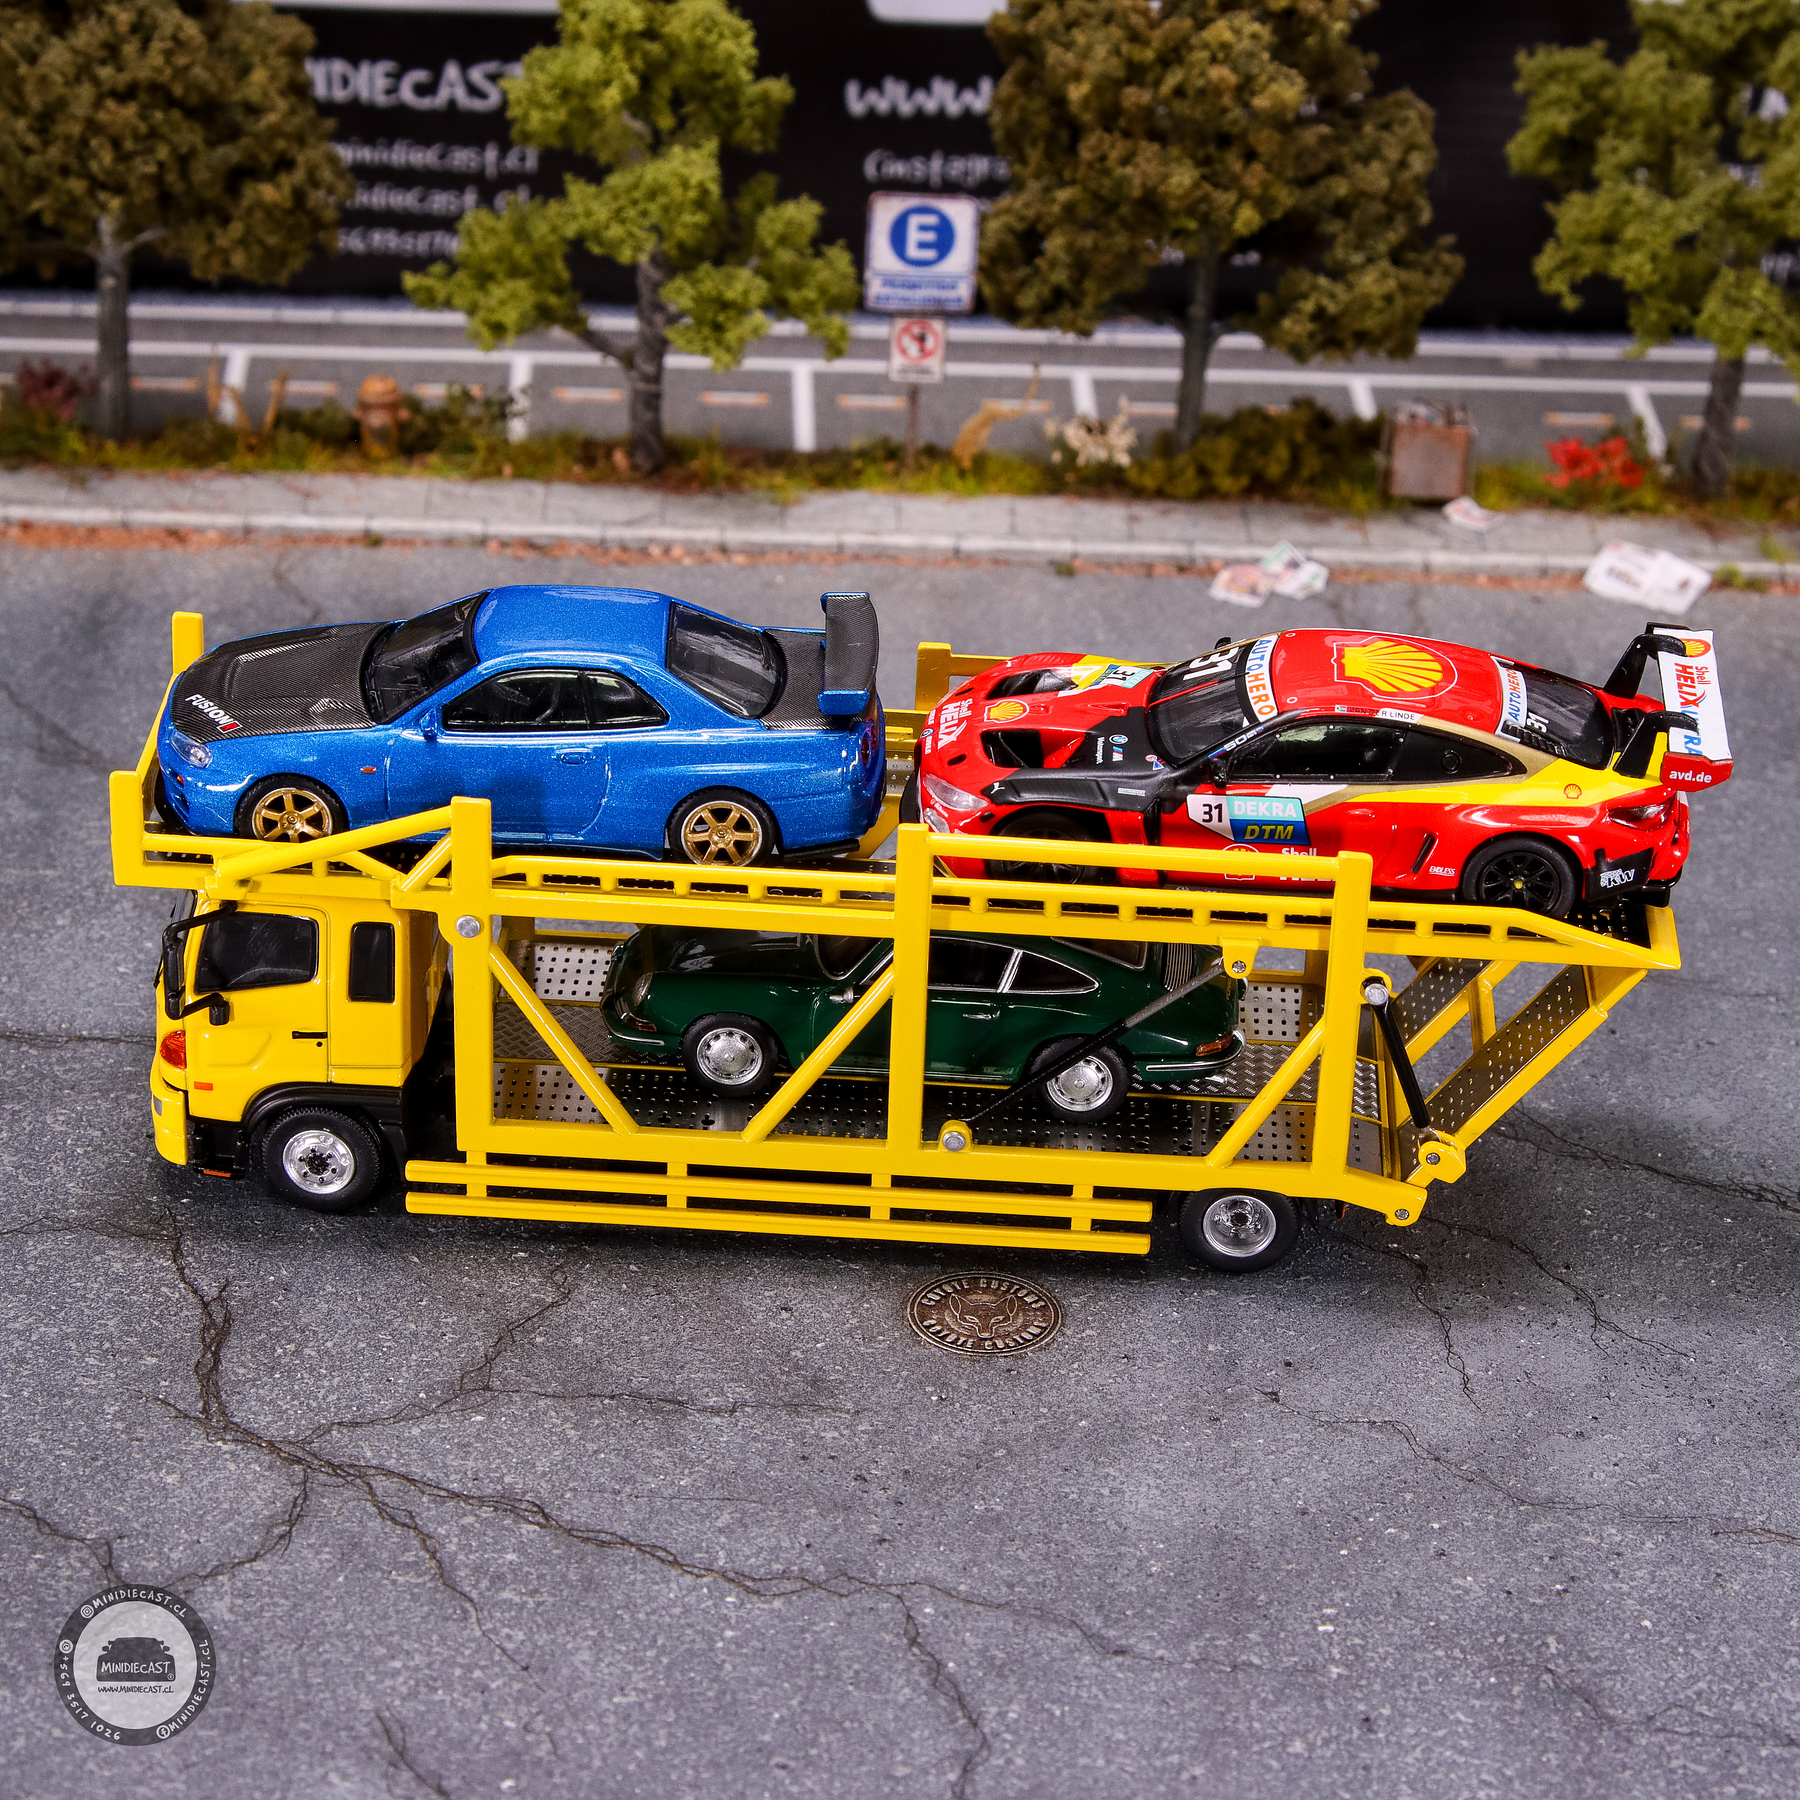 Tiny City Die-cast Model Car - HINO500 Vehicle Transporter (Yellow).